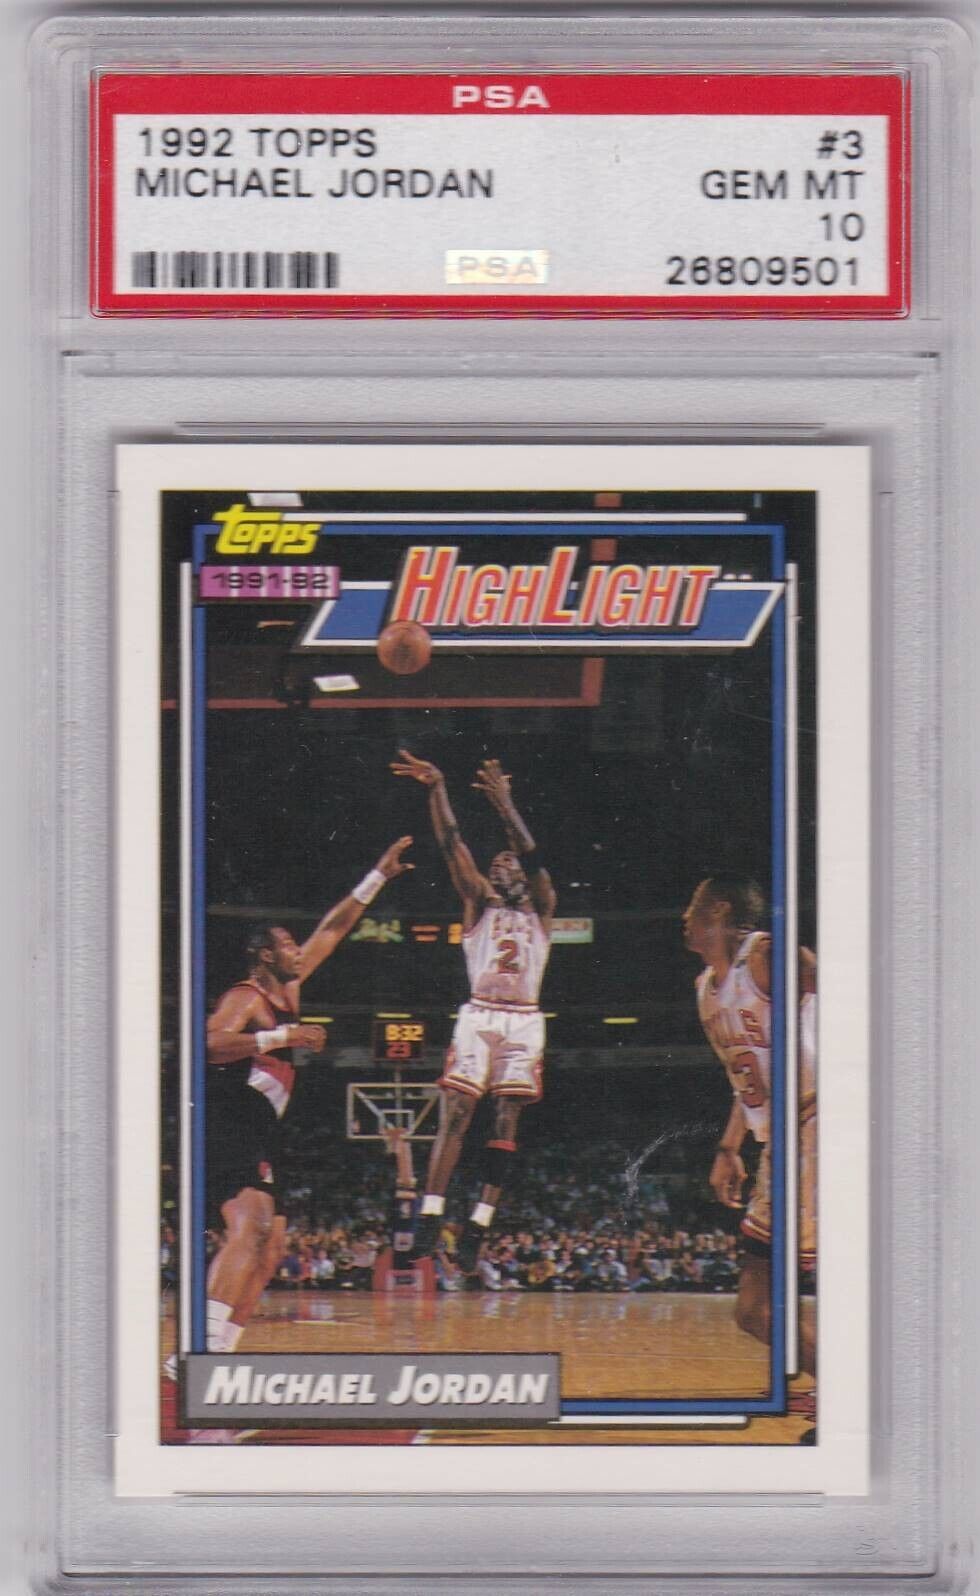 1992 Topps Highlight #3 Michael Jordan Bulls PSA 10 Gem Mint Free Shipping!